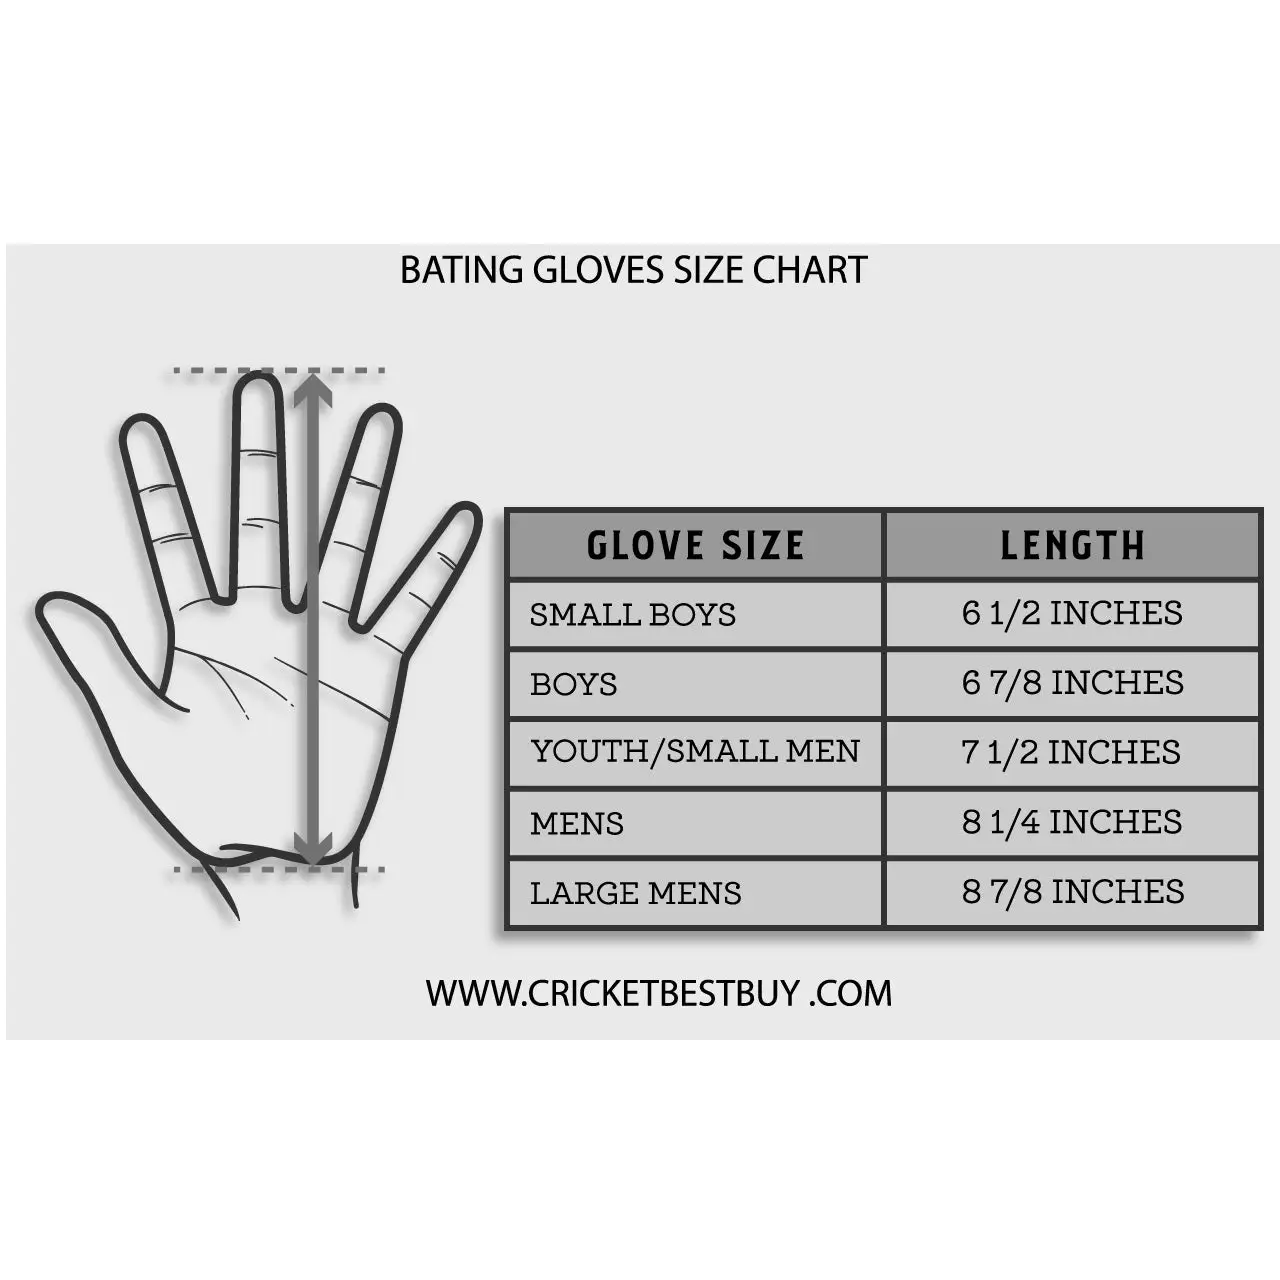 SG RSD Supalite Cricket Batting Gloves - GLOVE - BATTING